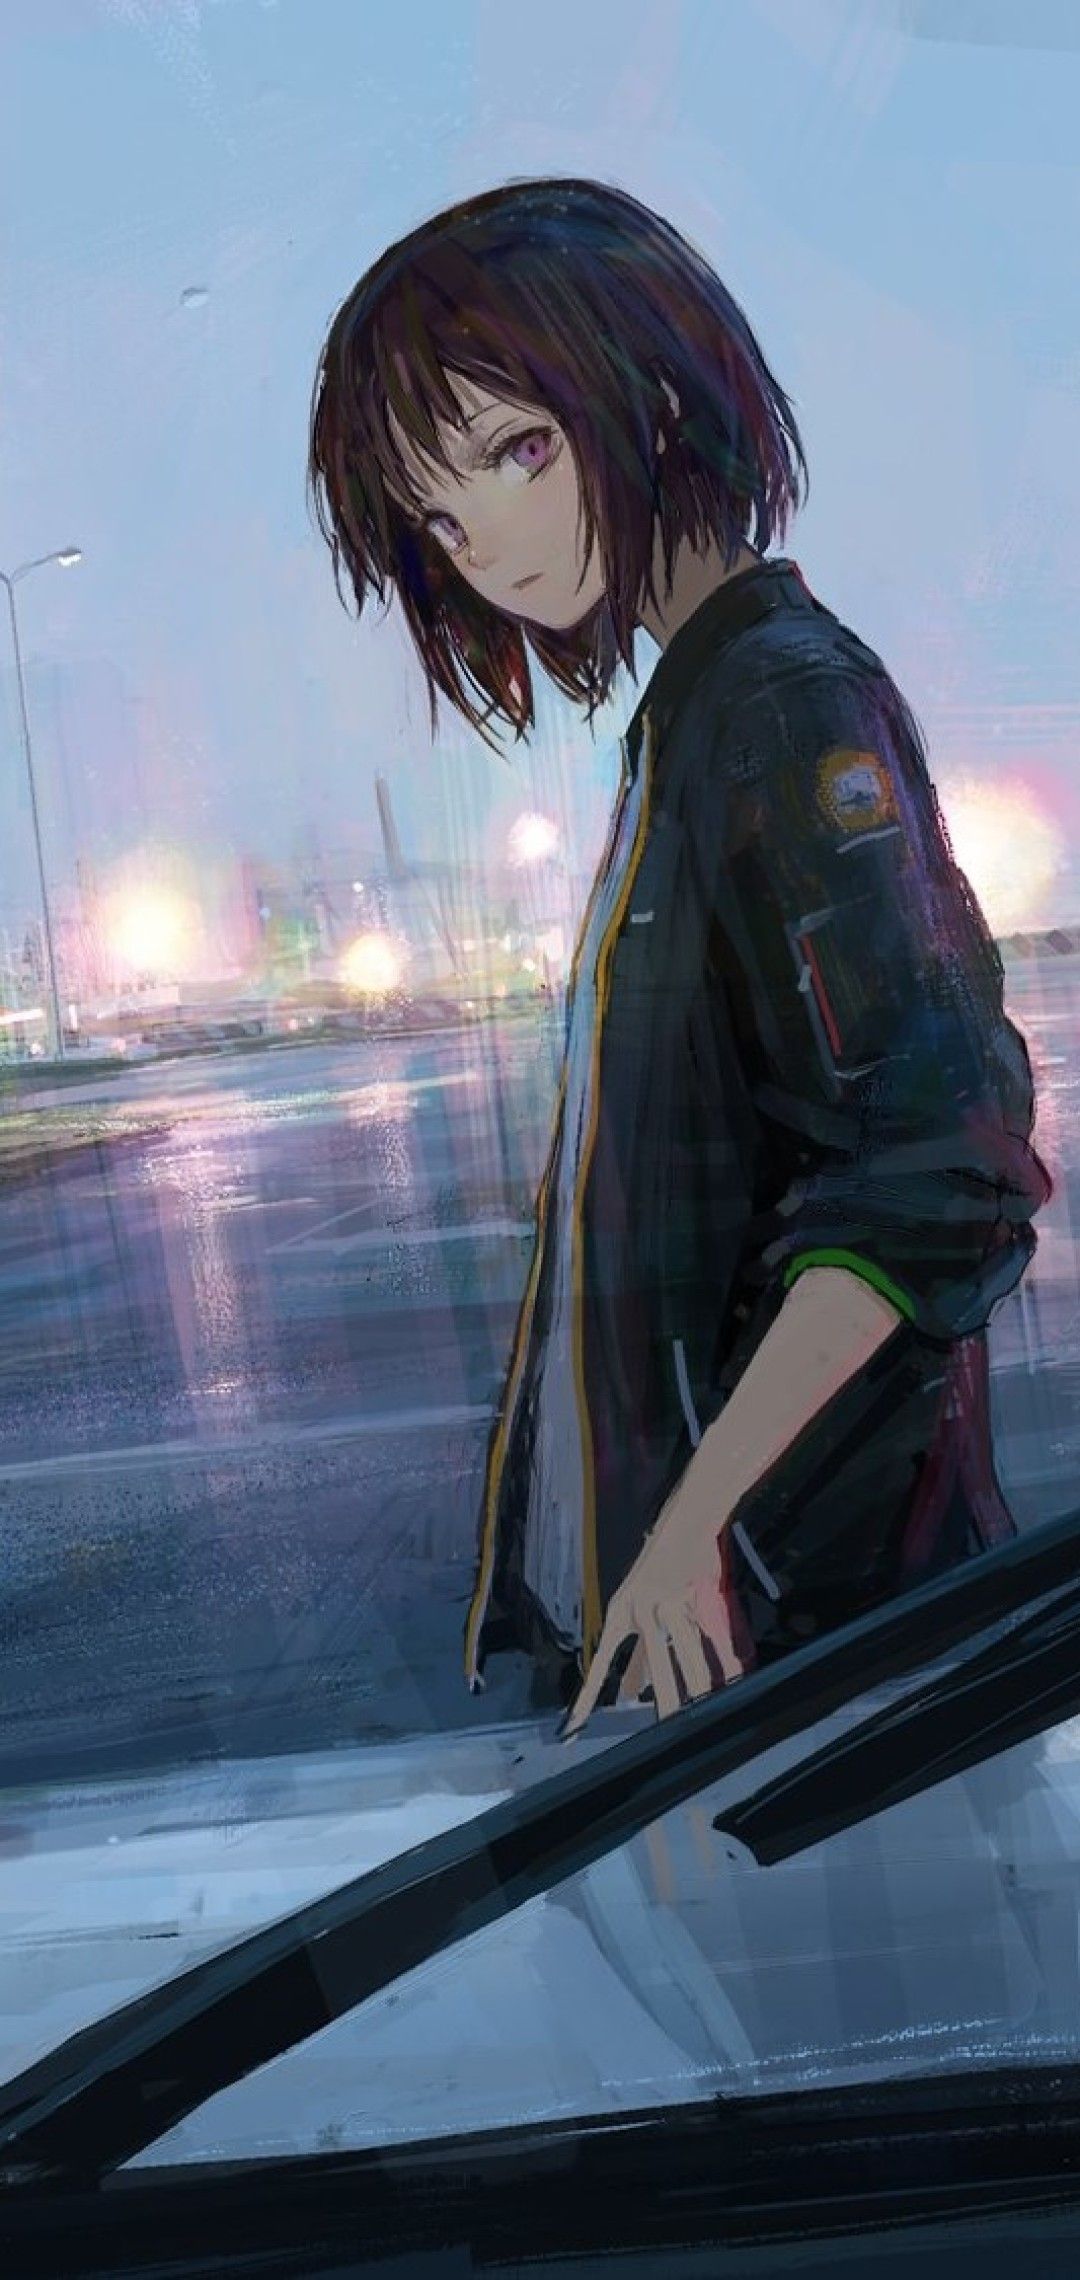 aesthetic anime girl with short black hair